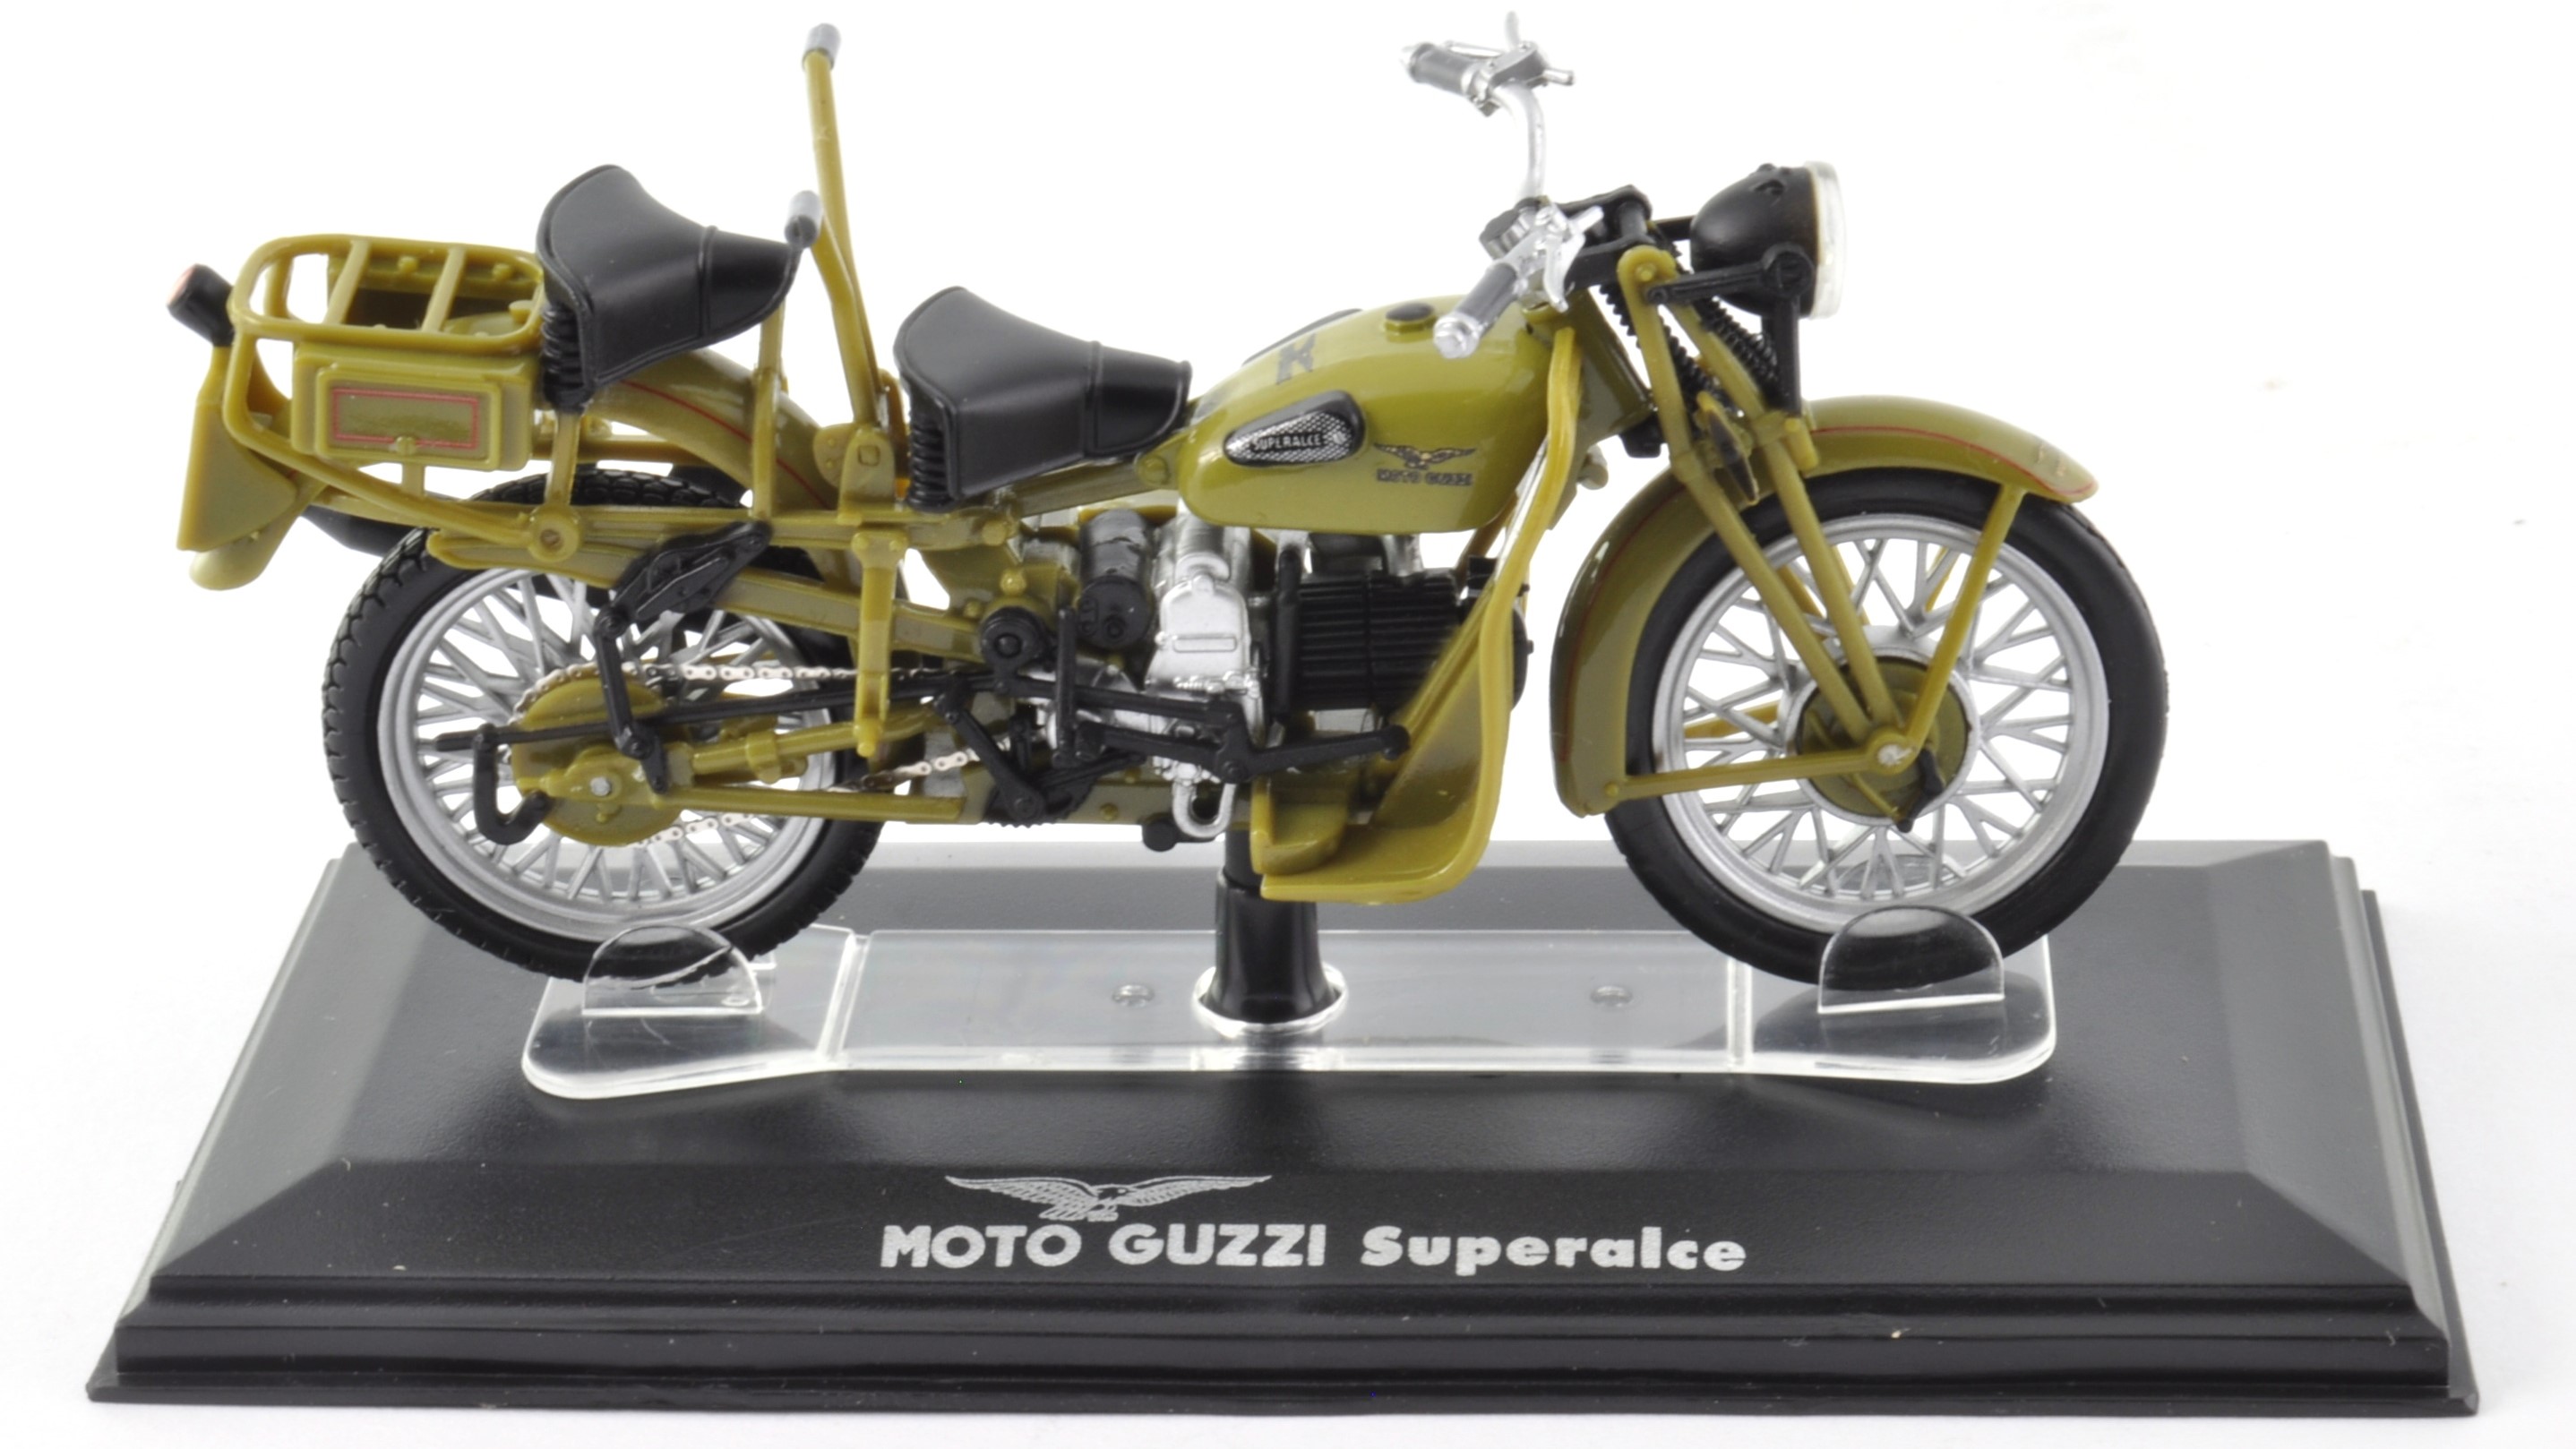 Moto Guzzi Superalce